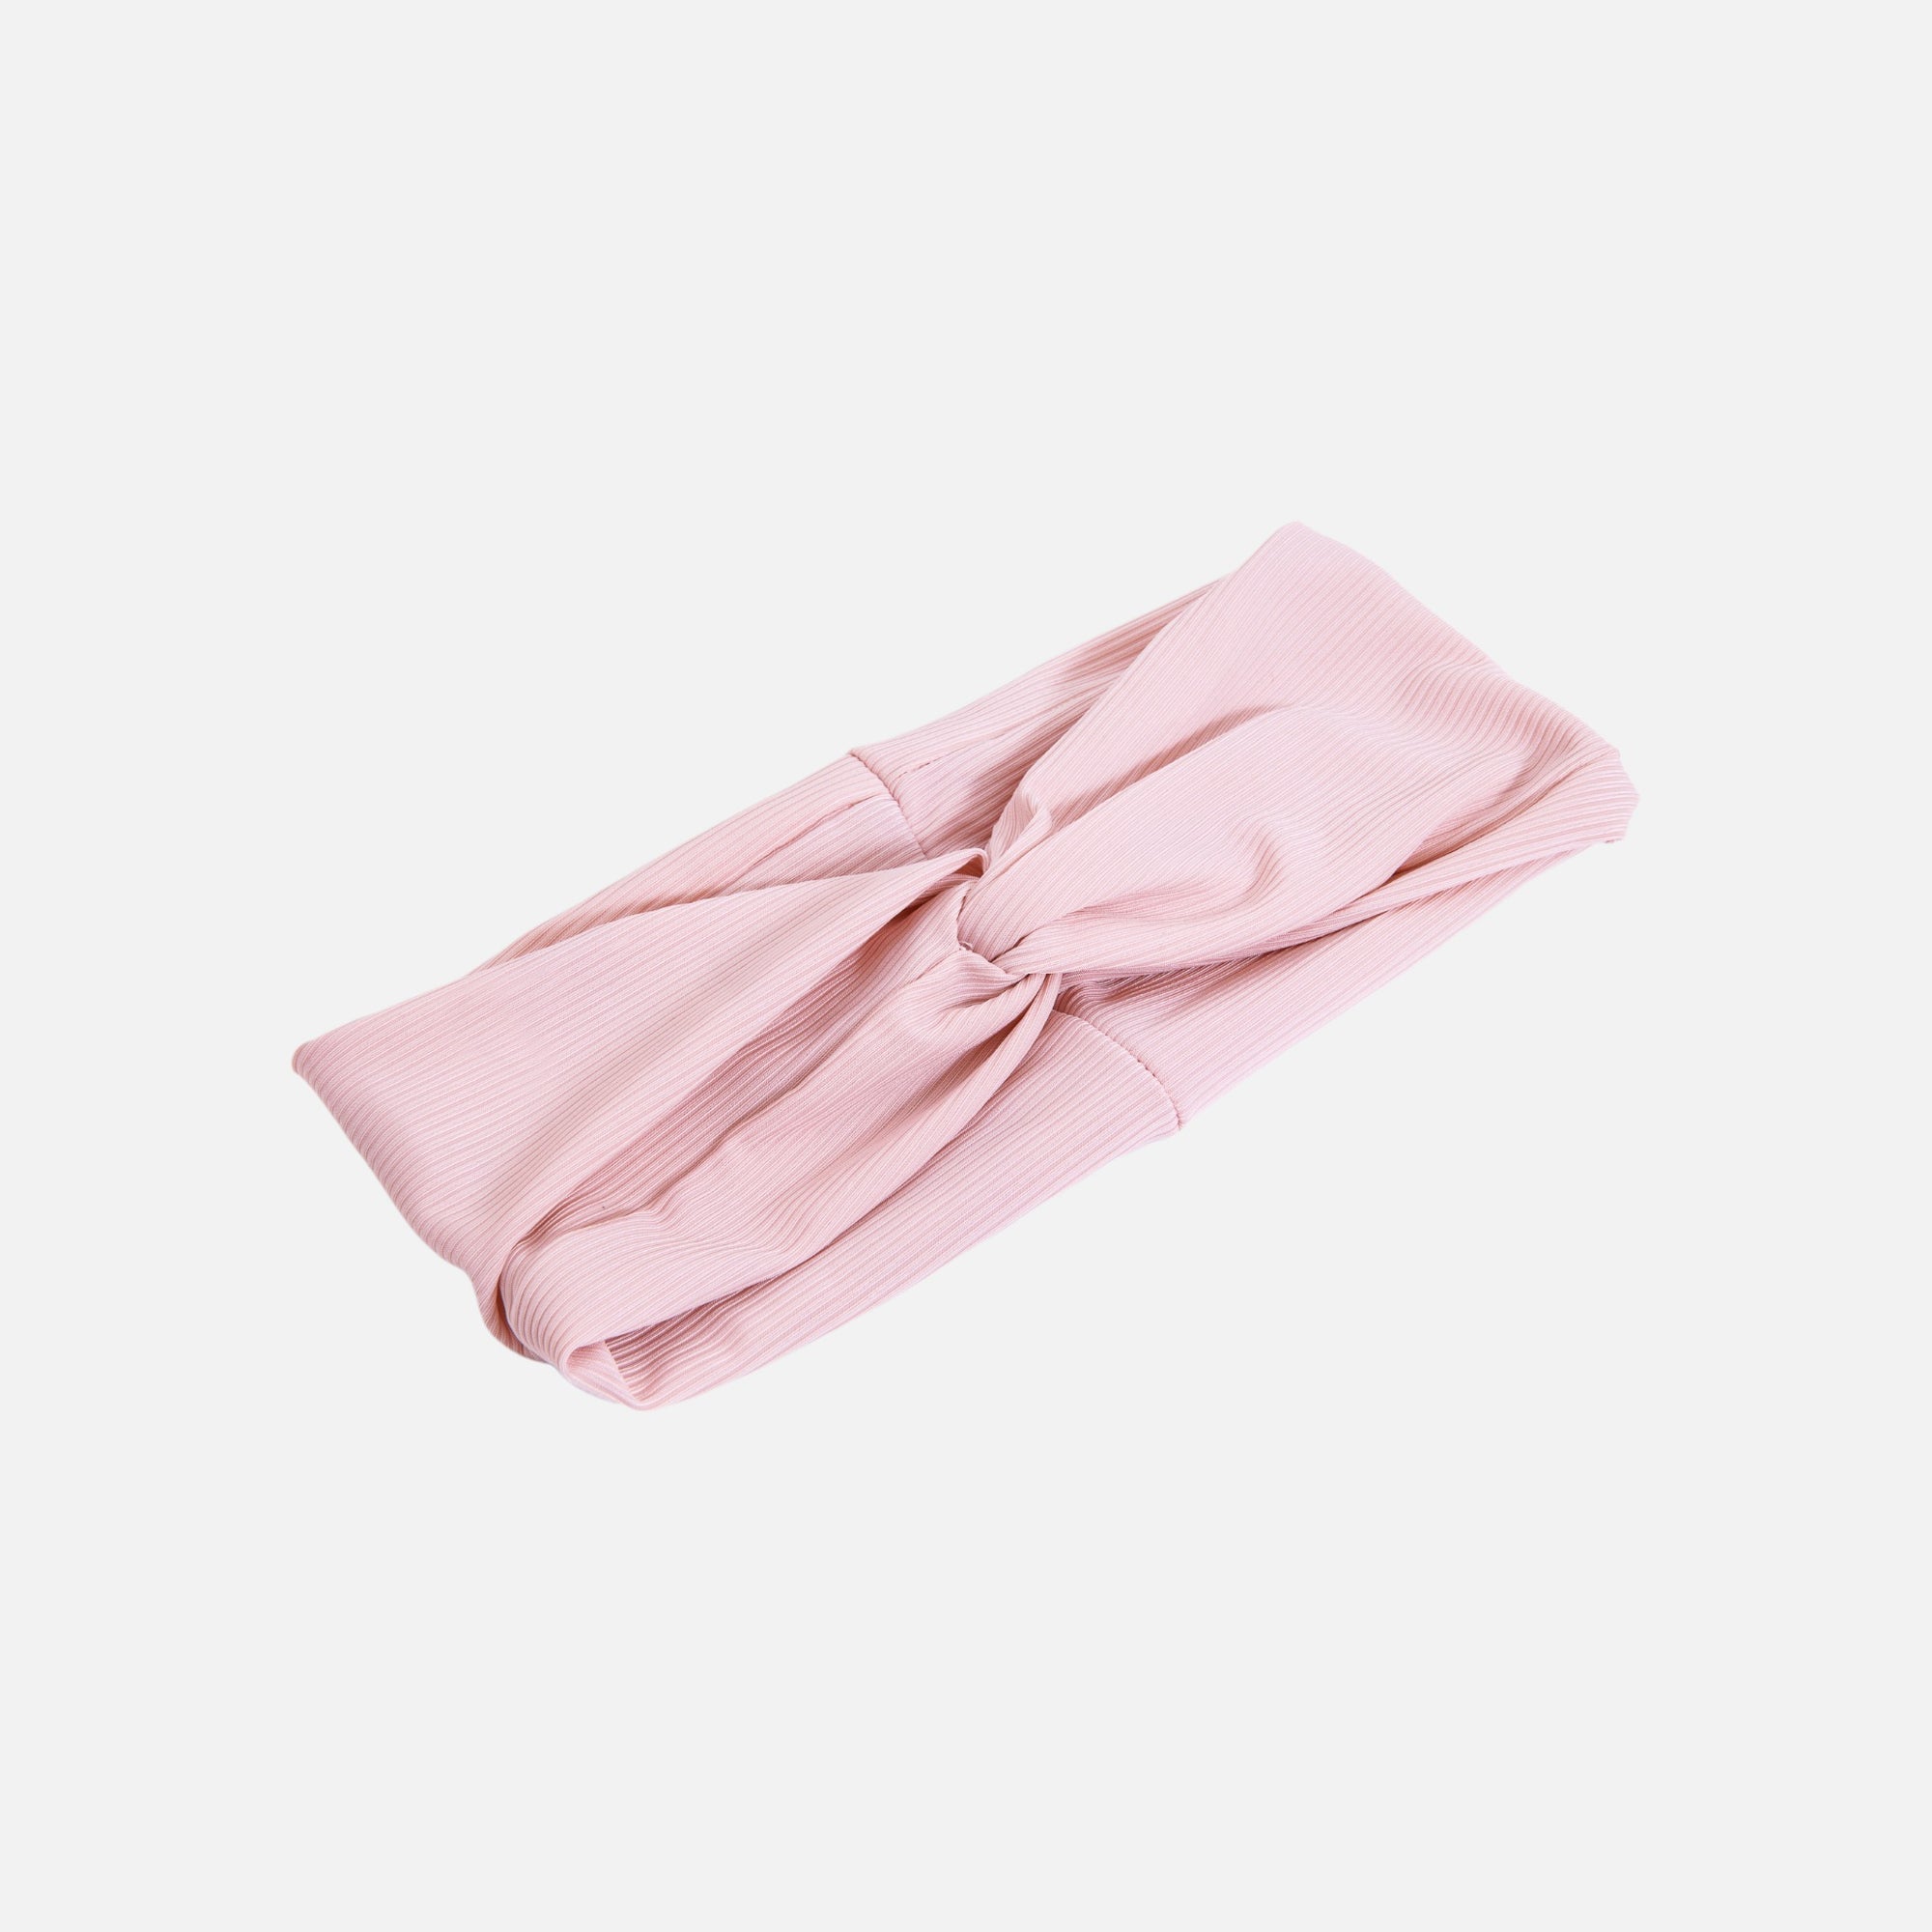 Light pink headband with knot